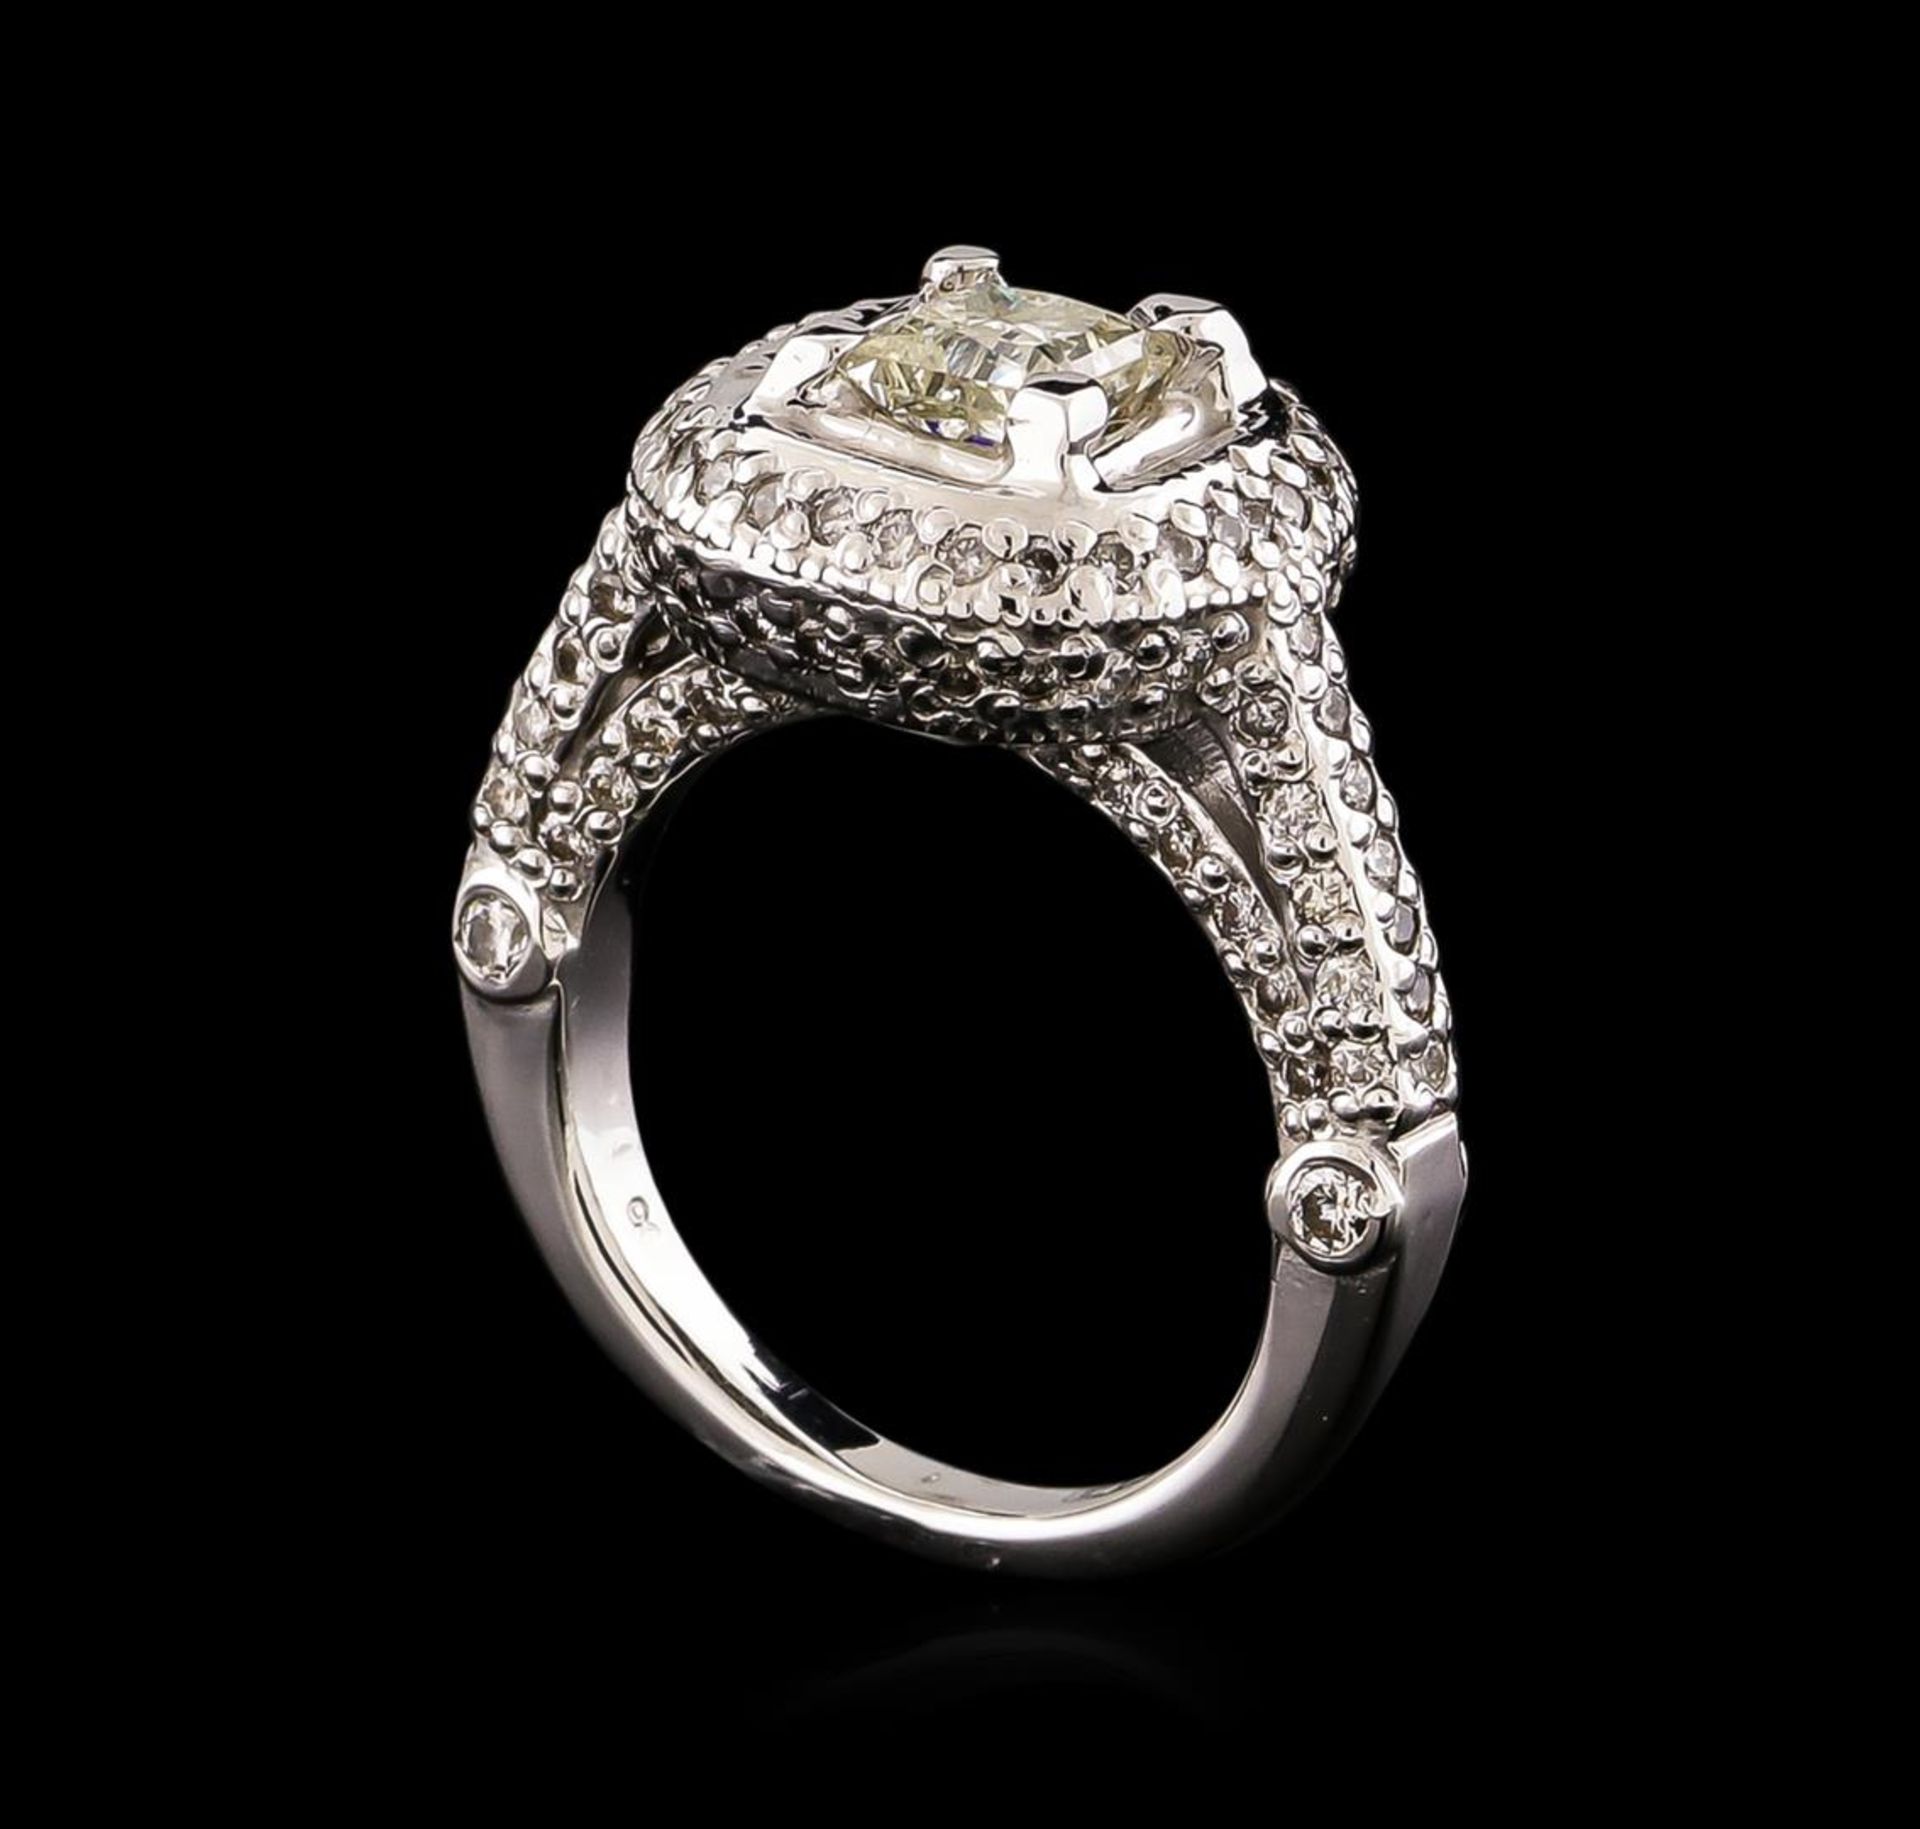 14KT White Gold 1.78 ctw Diamond Ring - Image 4 of 5